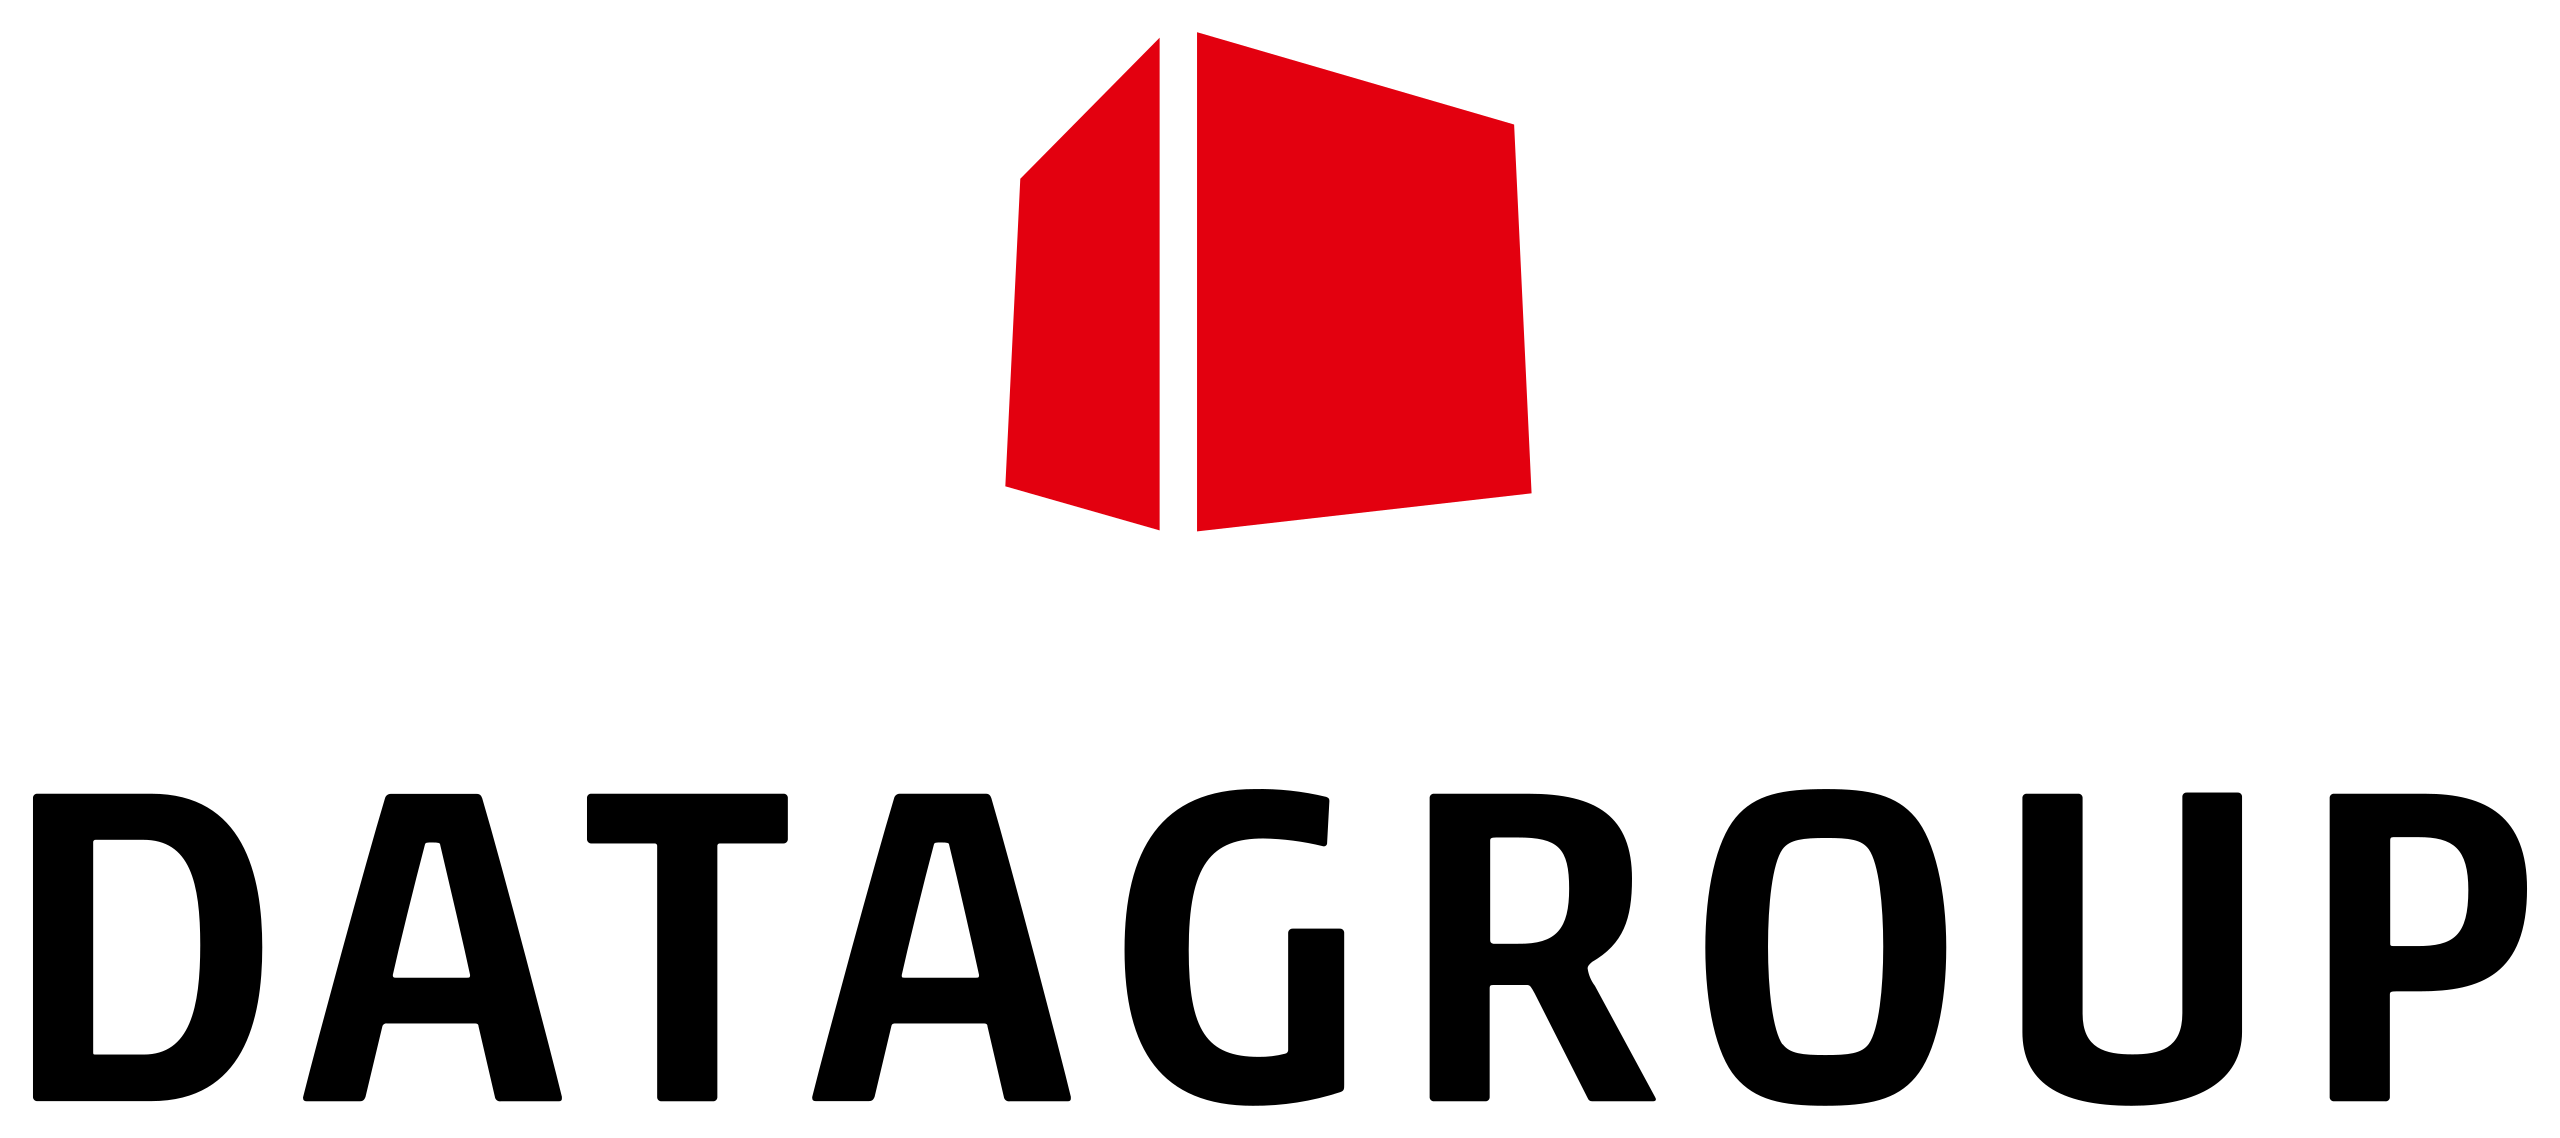 File:Roblox Logo 2021.png - Wikipedia